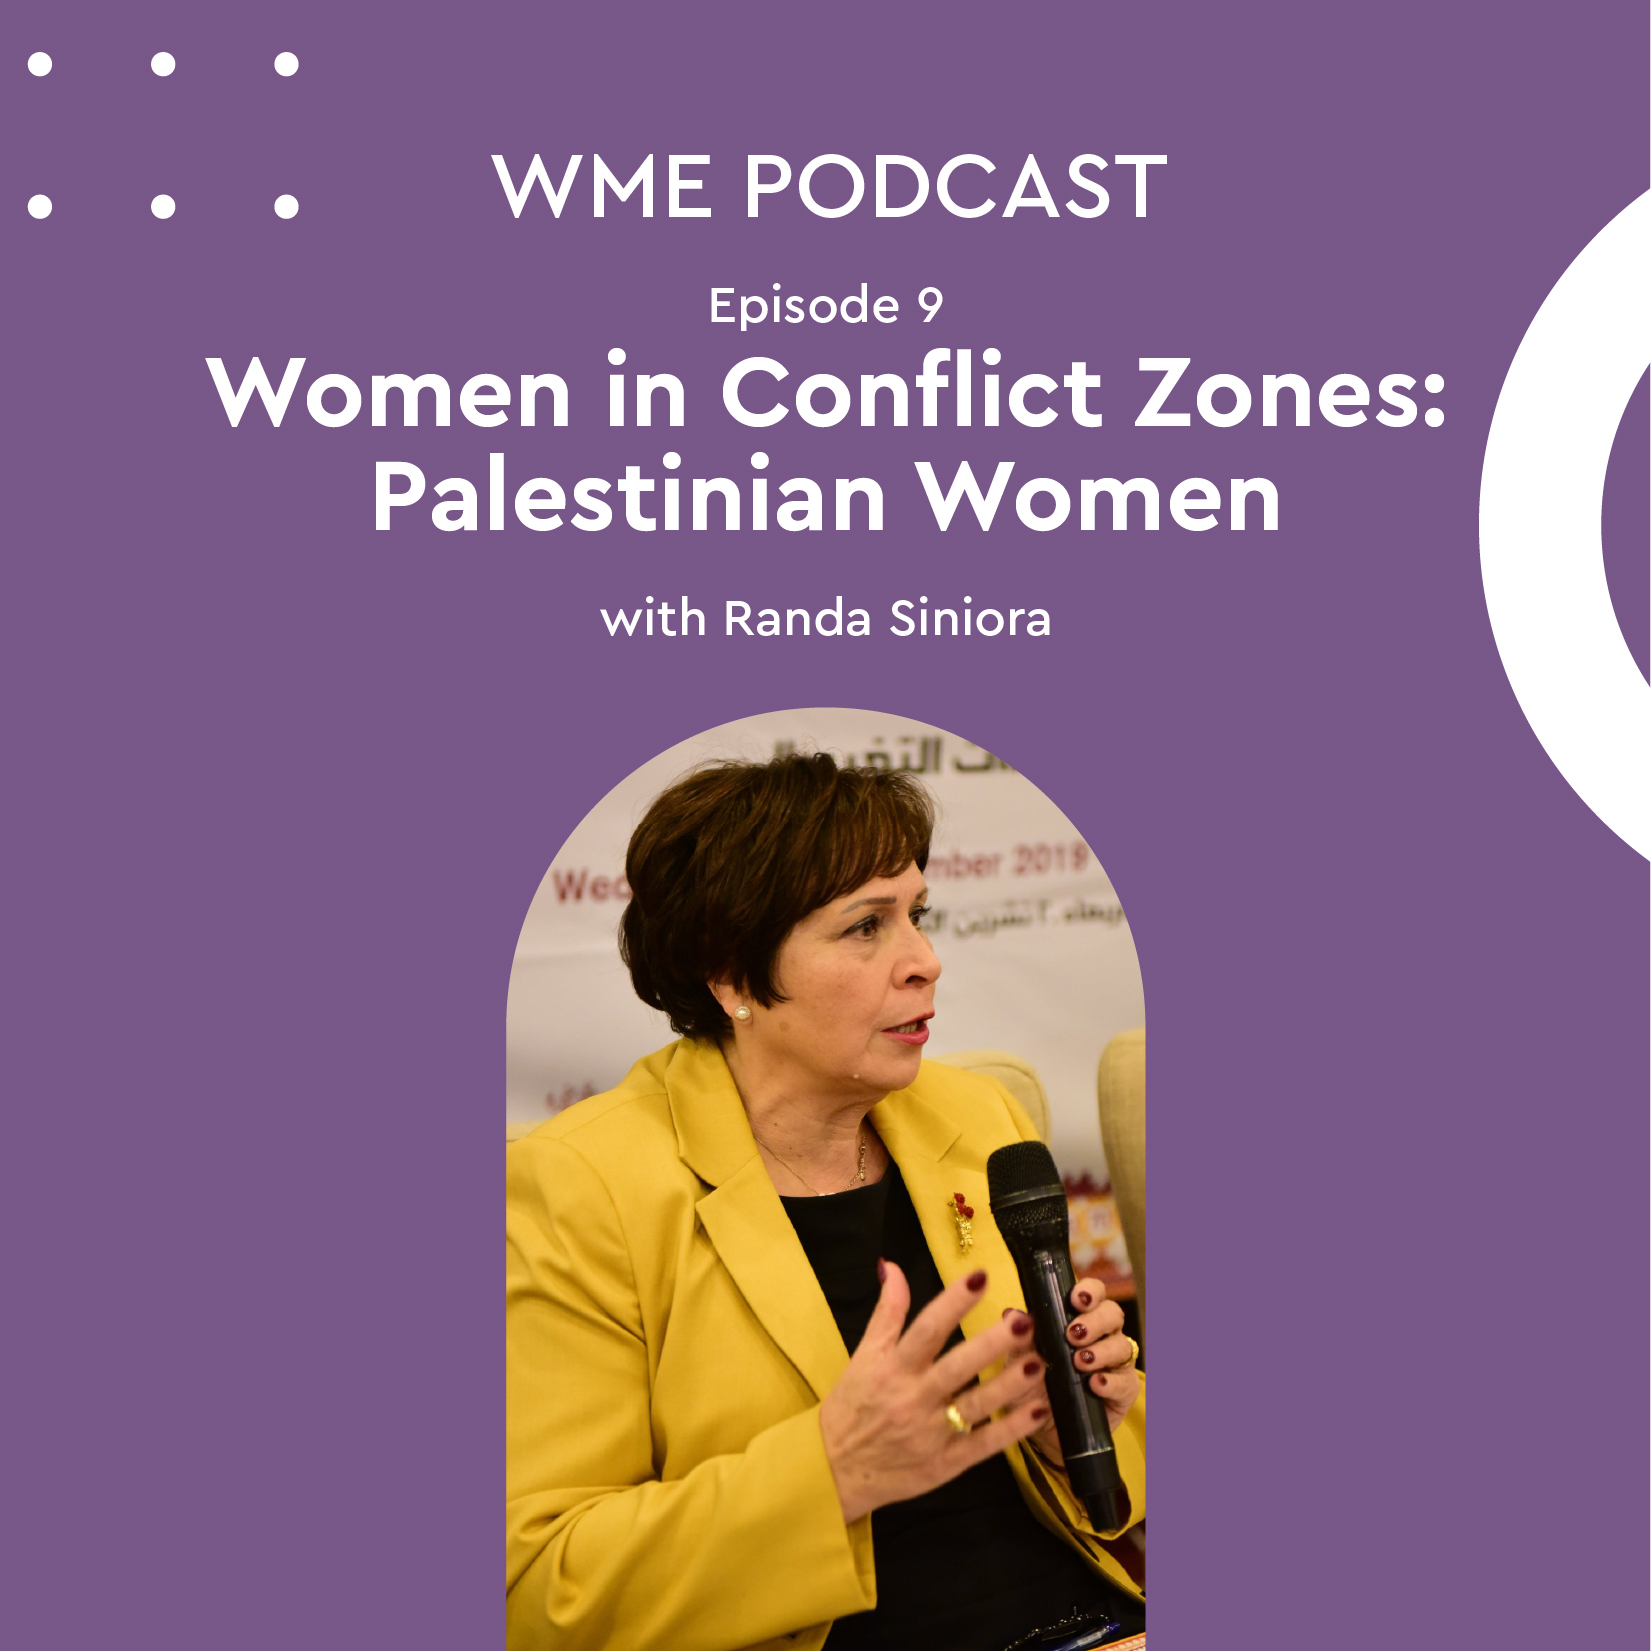 Episode 9: Women in Conflict Zones: Palestinian Women with Randa Siniora